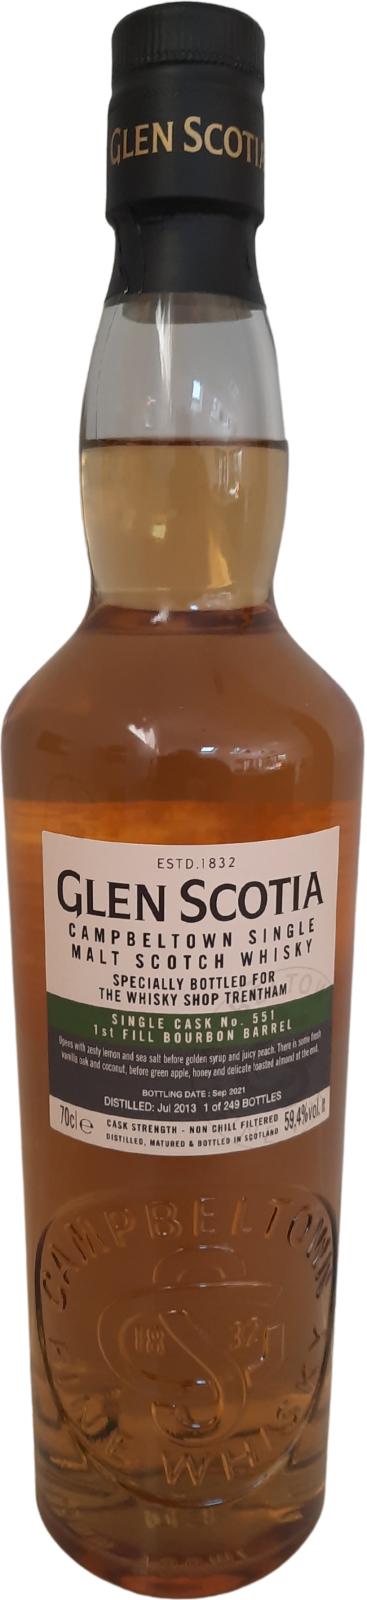 Glen Scotia 2013 Limited Edition single cask 1st fill Bourbon Barrel The Whisky Shop Trentham 59.4% 700ml